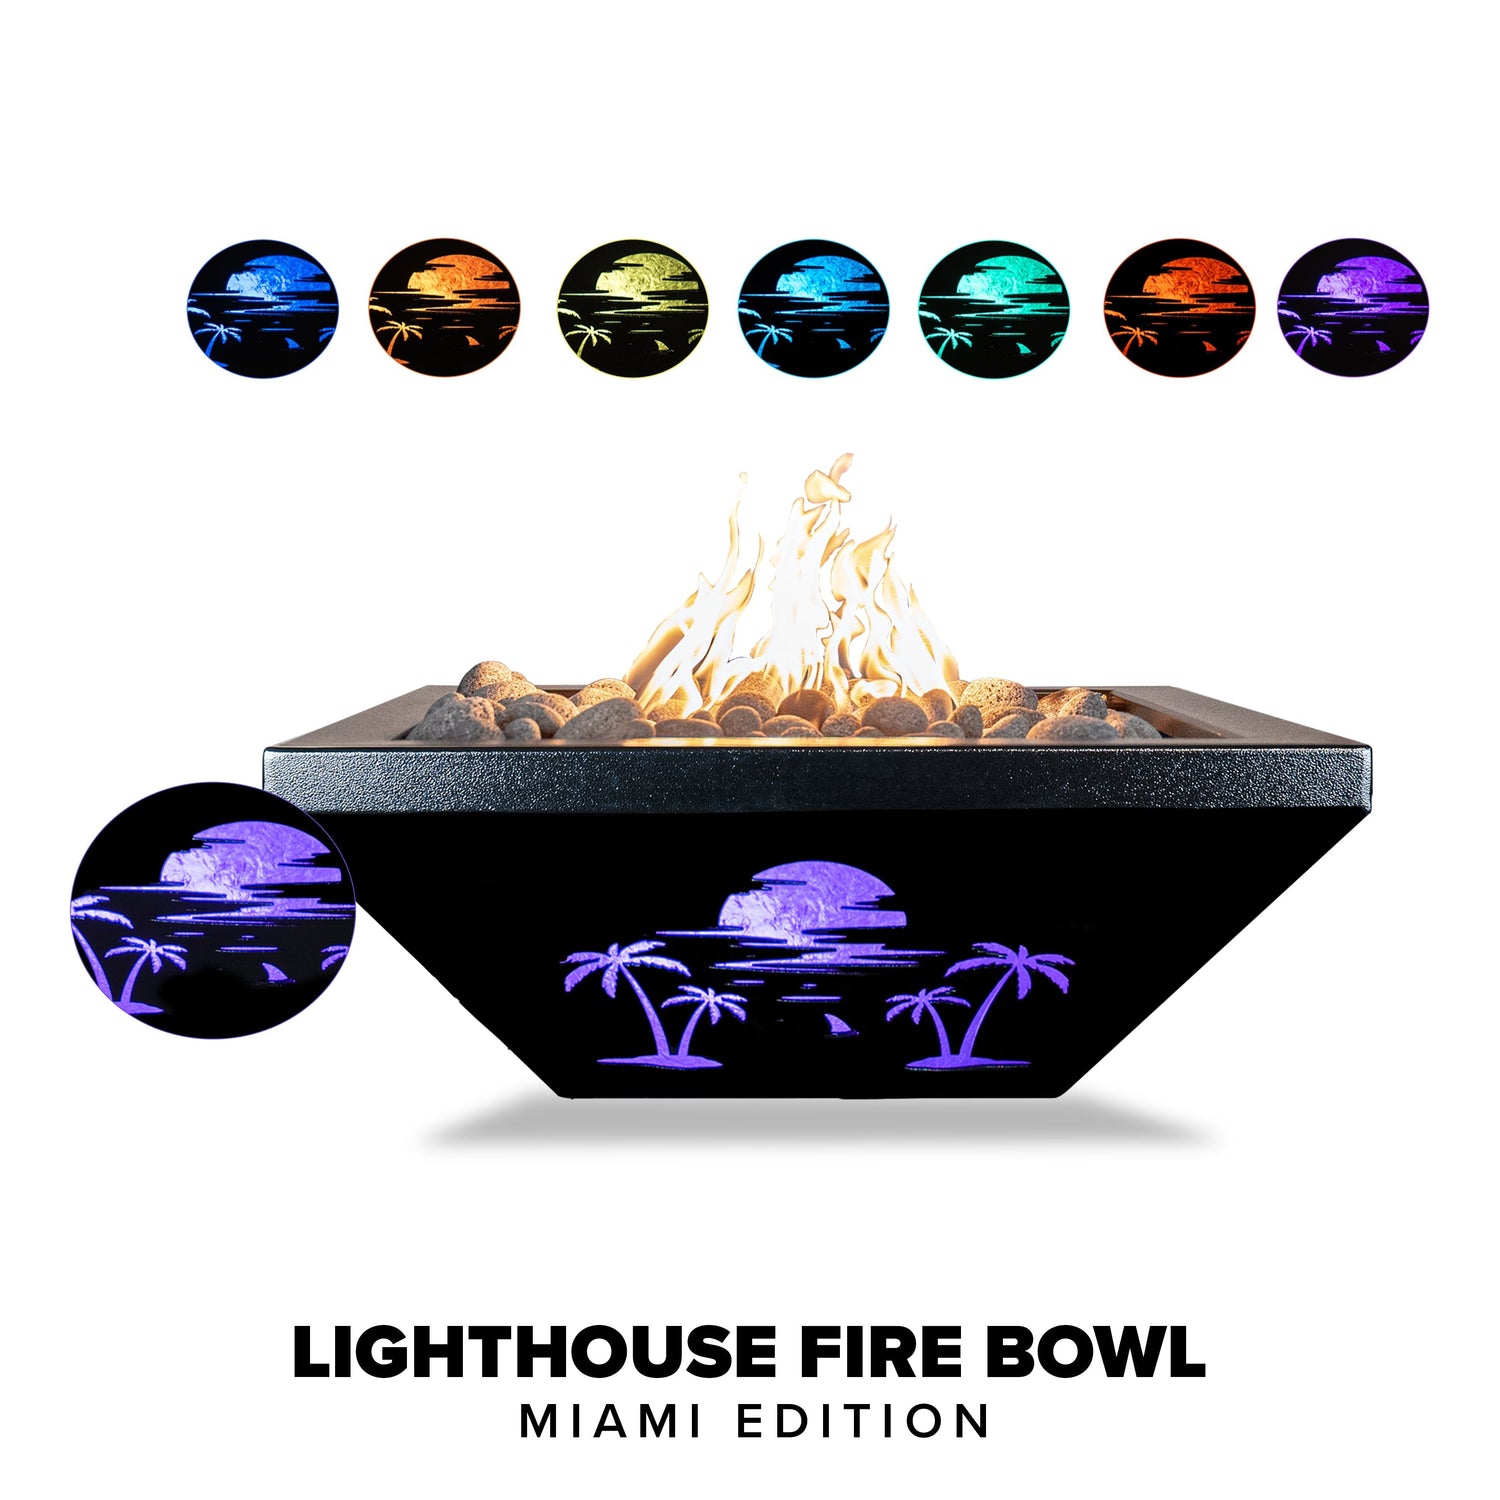 LED Fire bowls